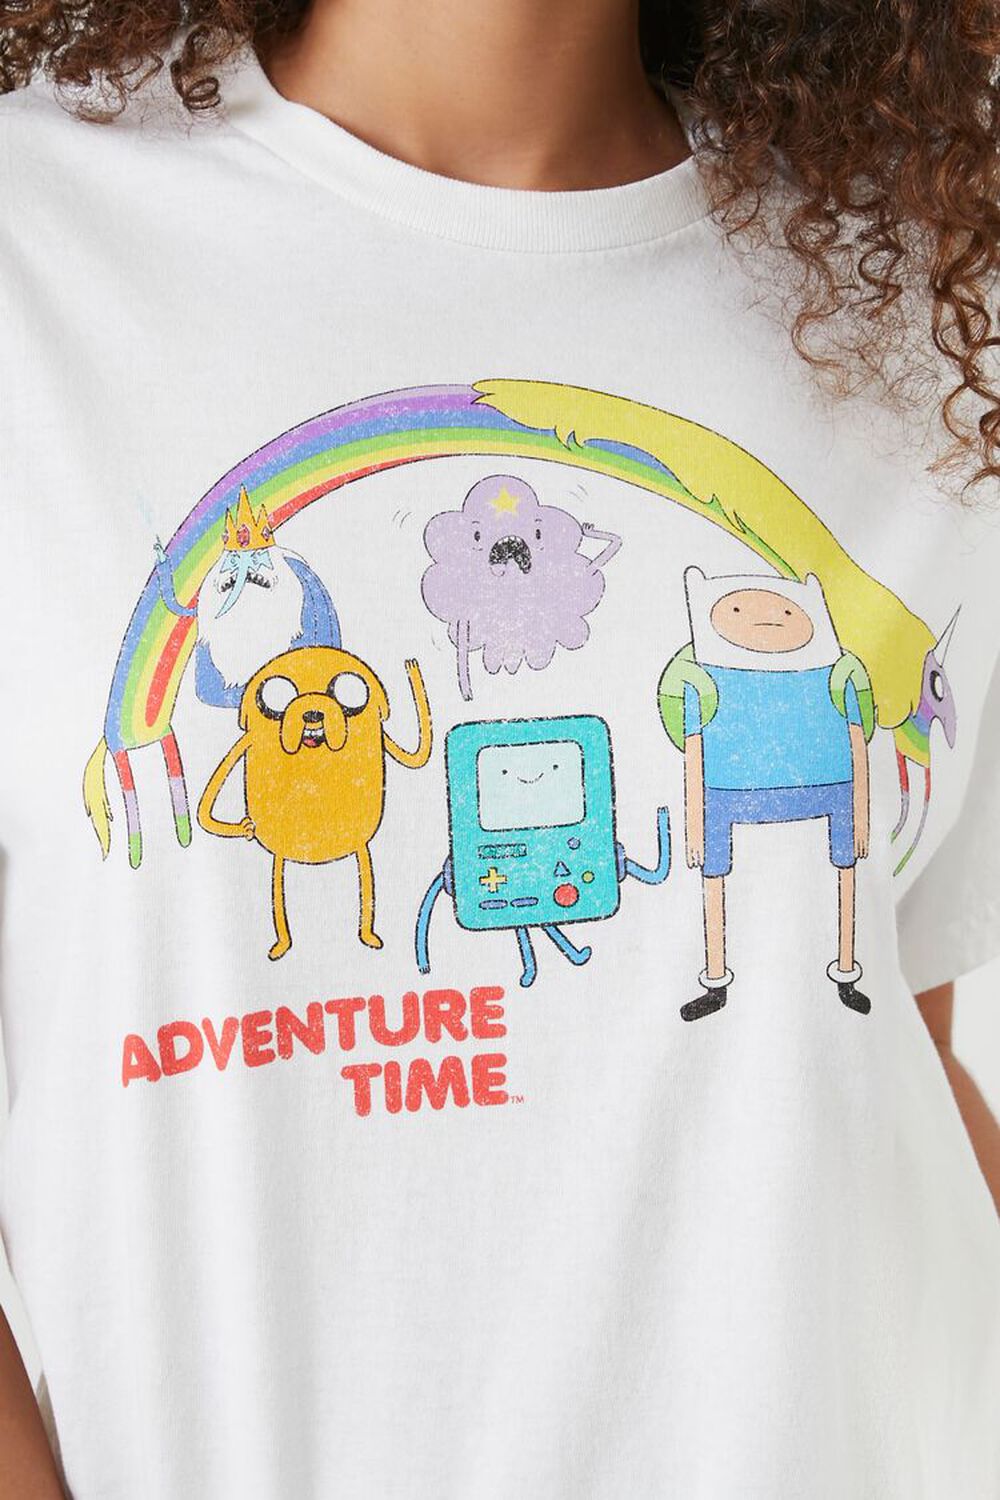 adventure time logo shirt